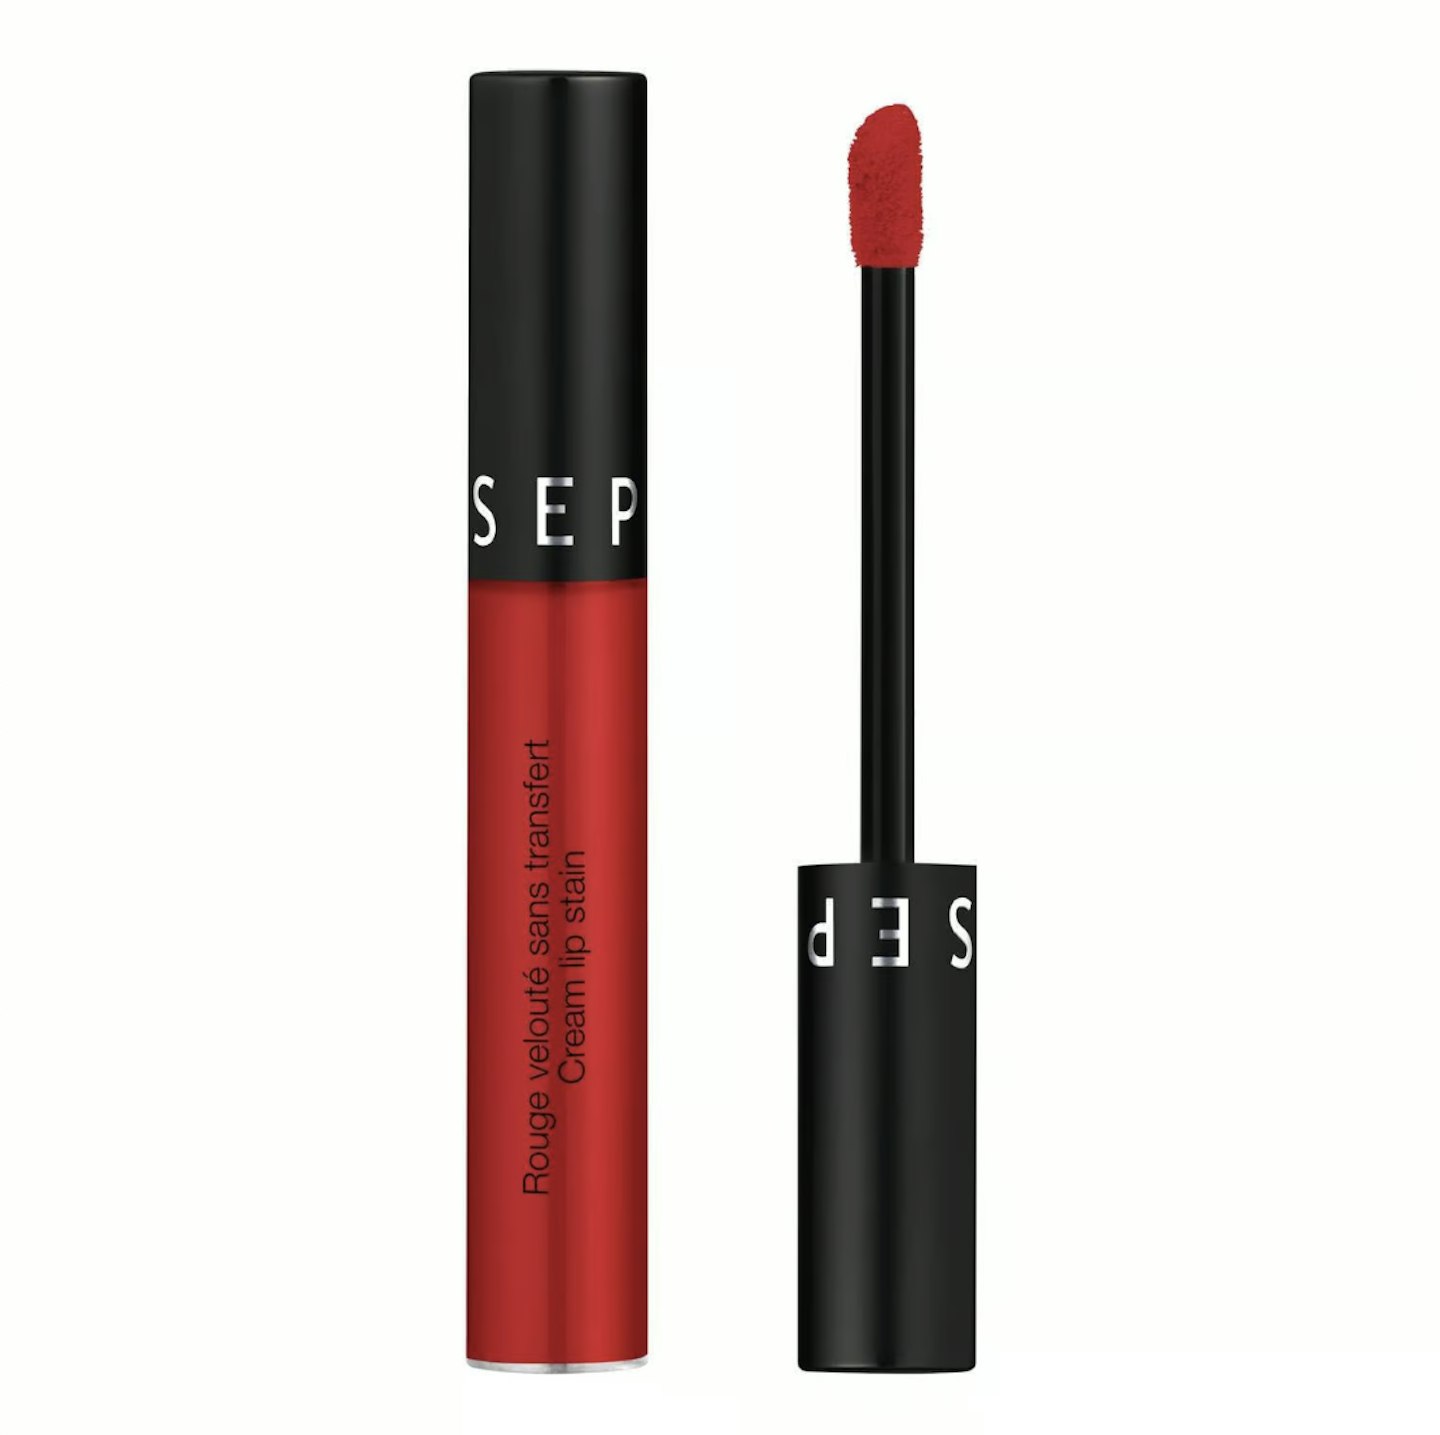 Sephora Collection Cream Lip Stain Matte Liquid Lipstick in 01. Classic Red